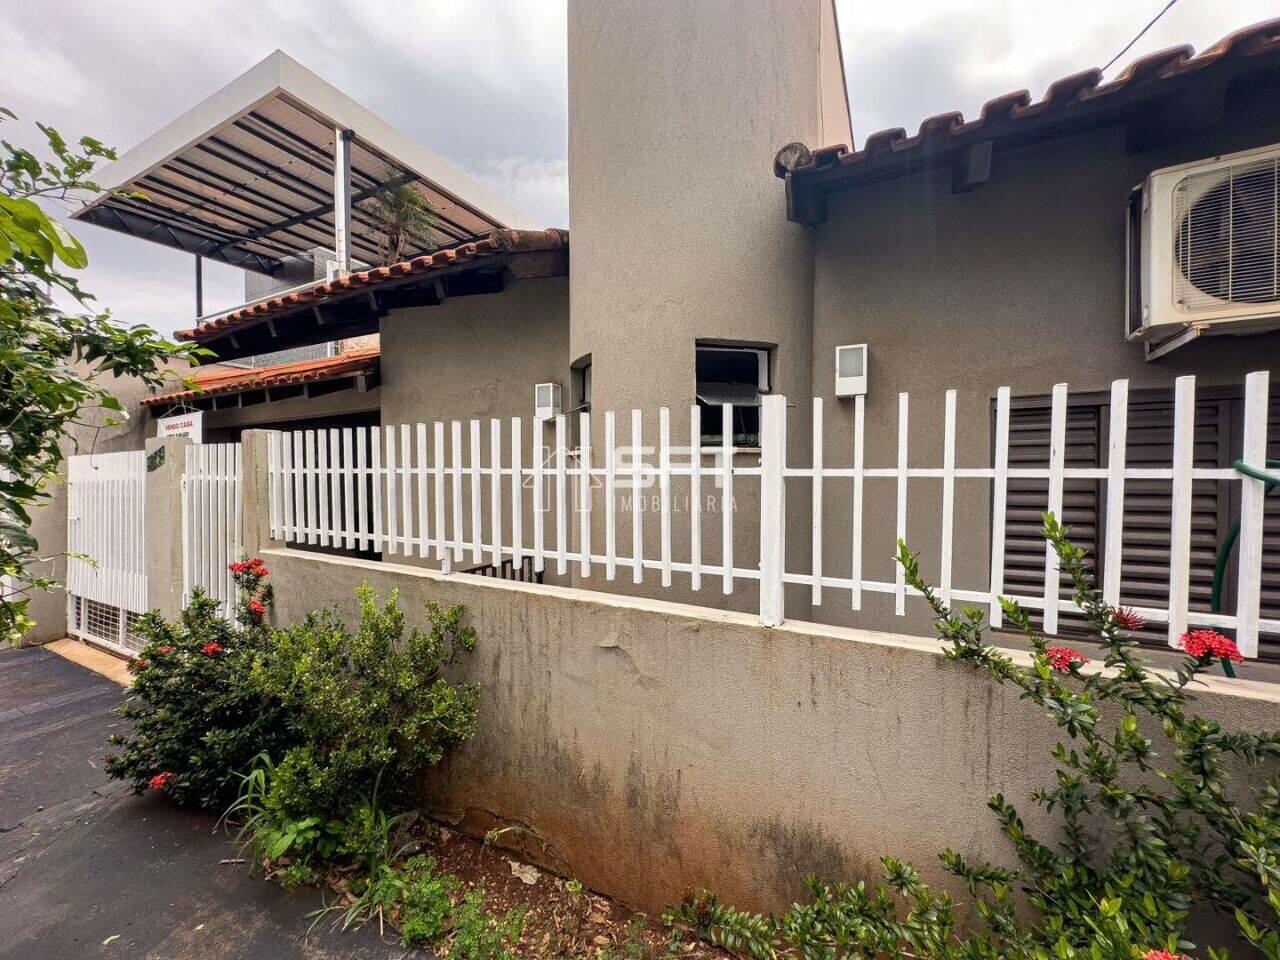 Casa Conjunto Habitacional Izidro Pedroso, Dourados - MS